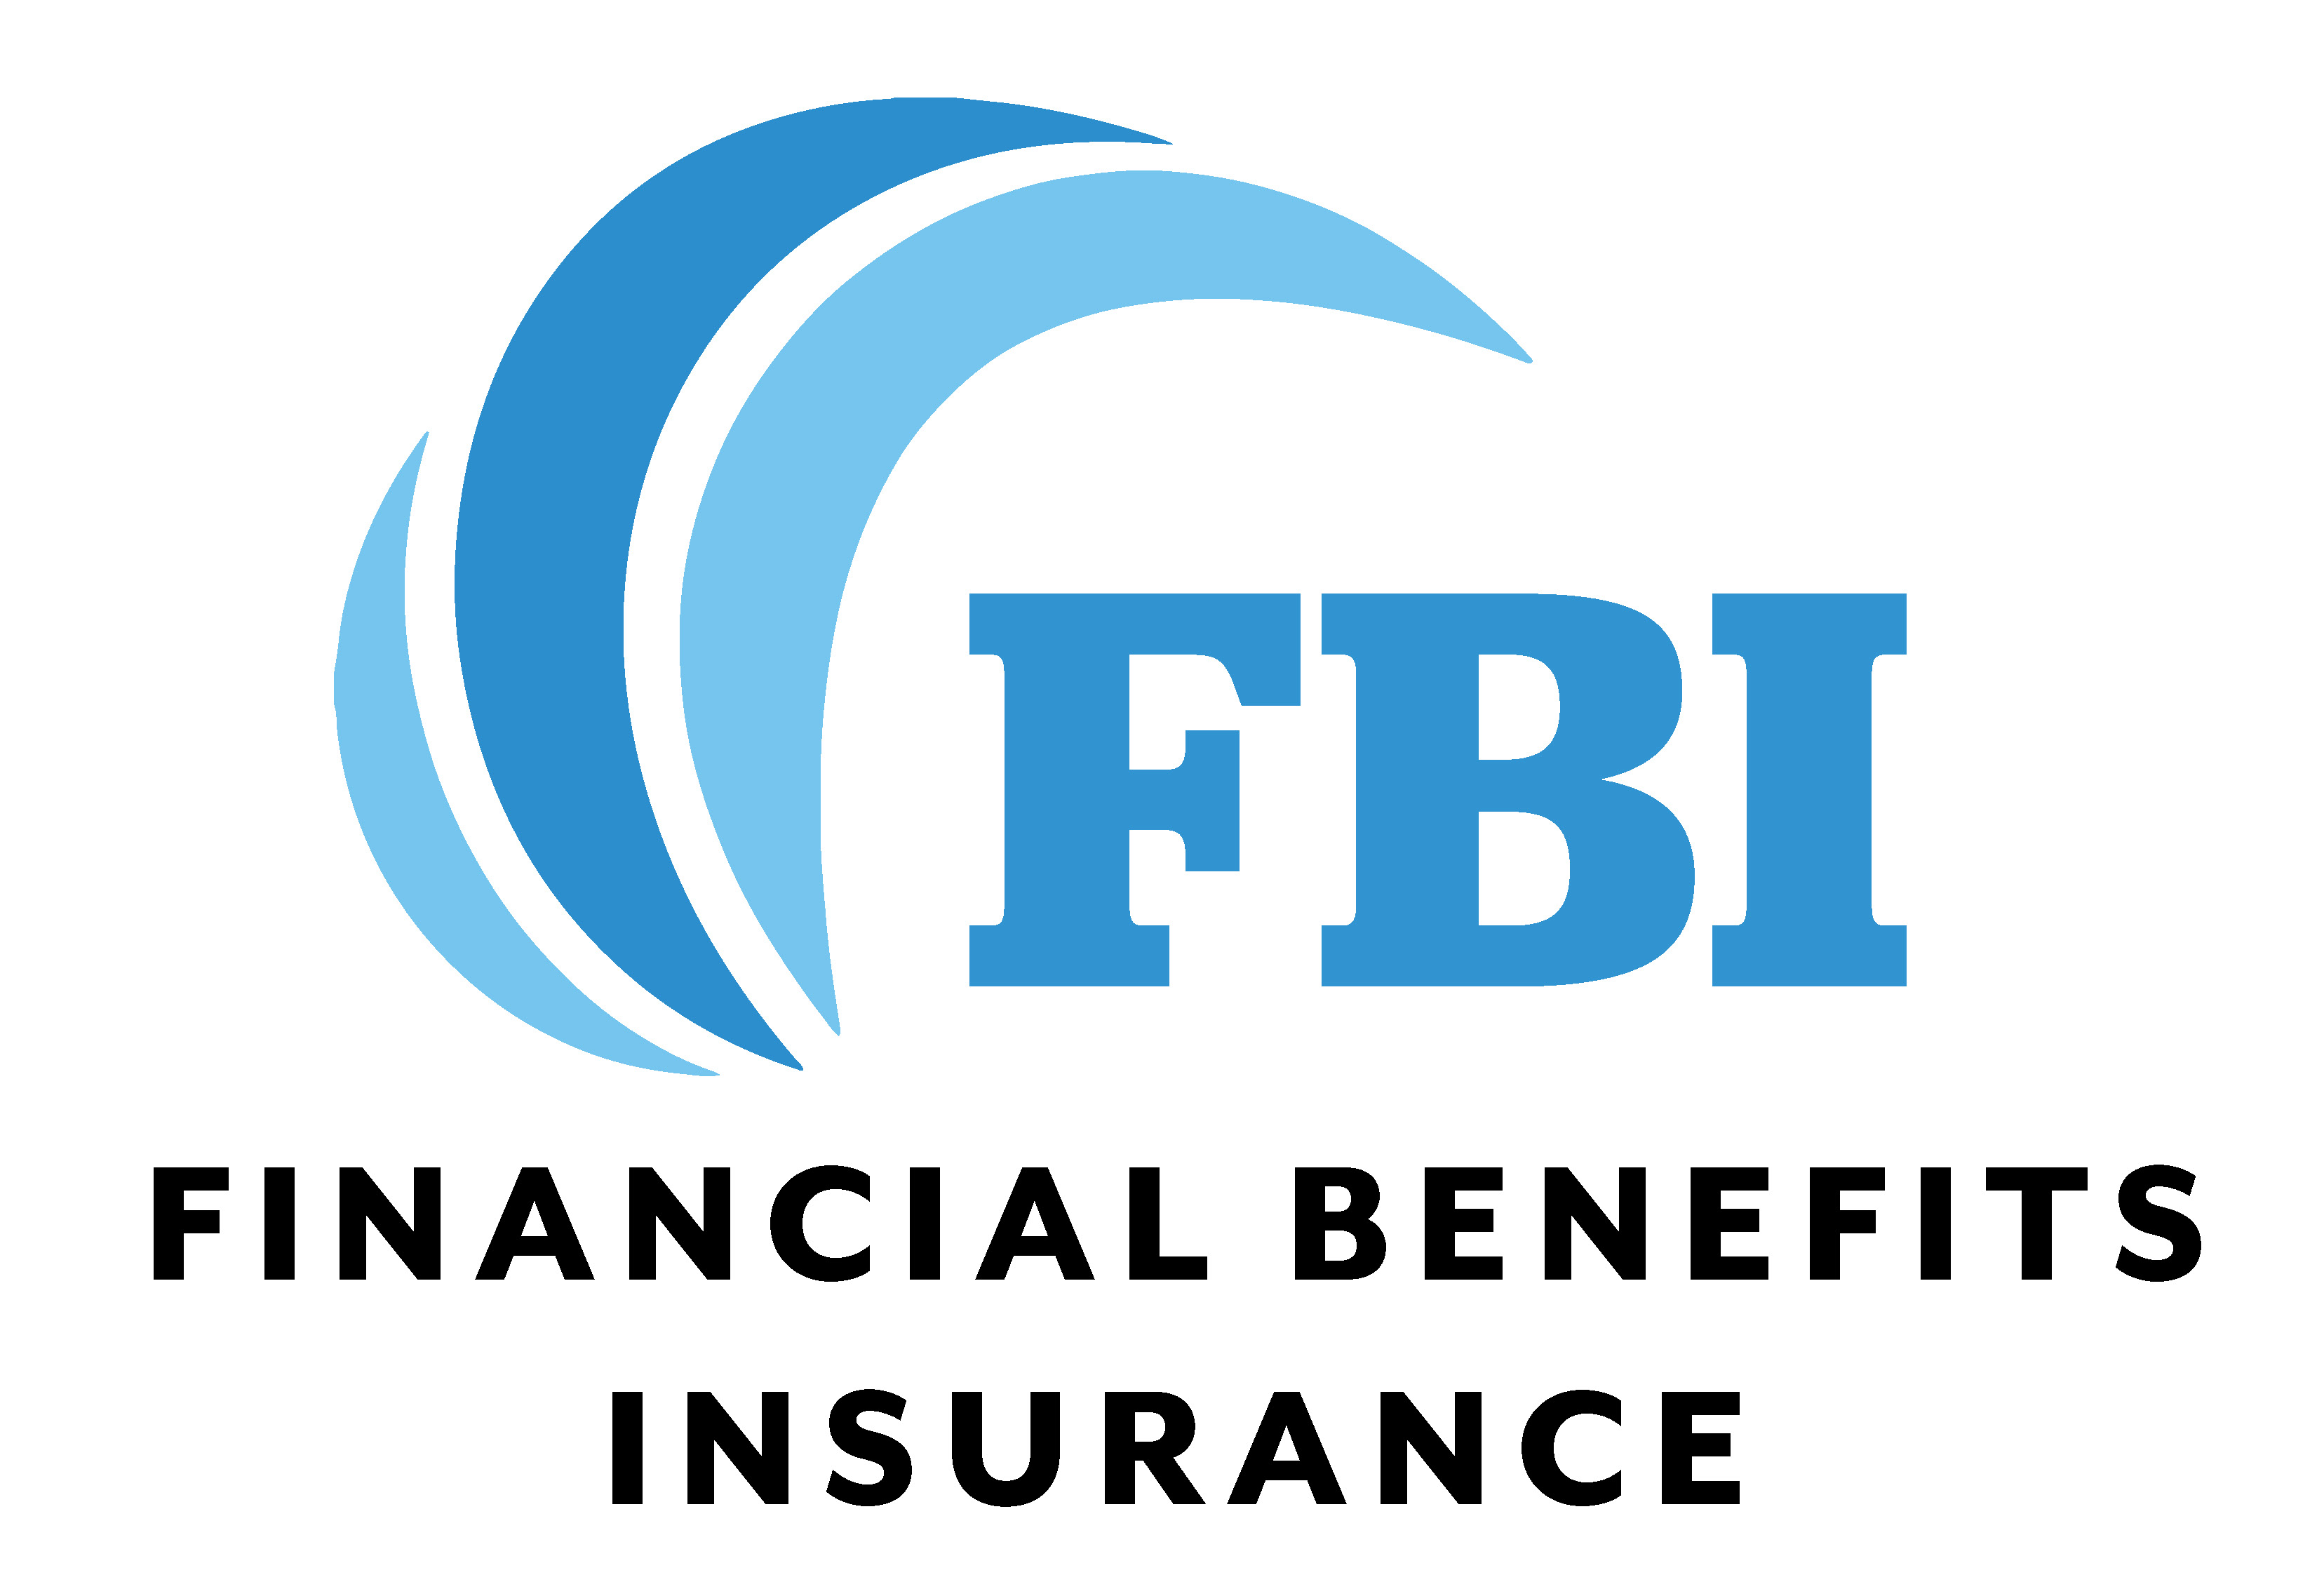 6. Financial Benefits Insurance (Silver)